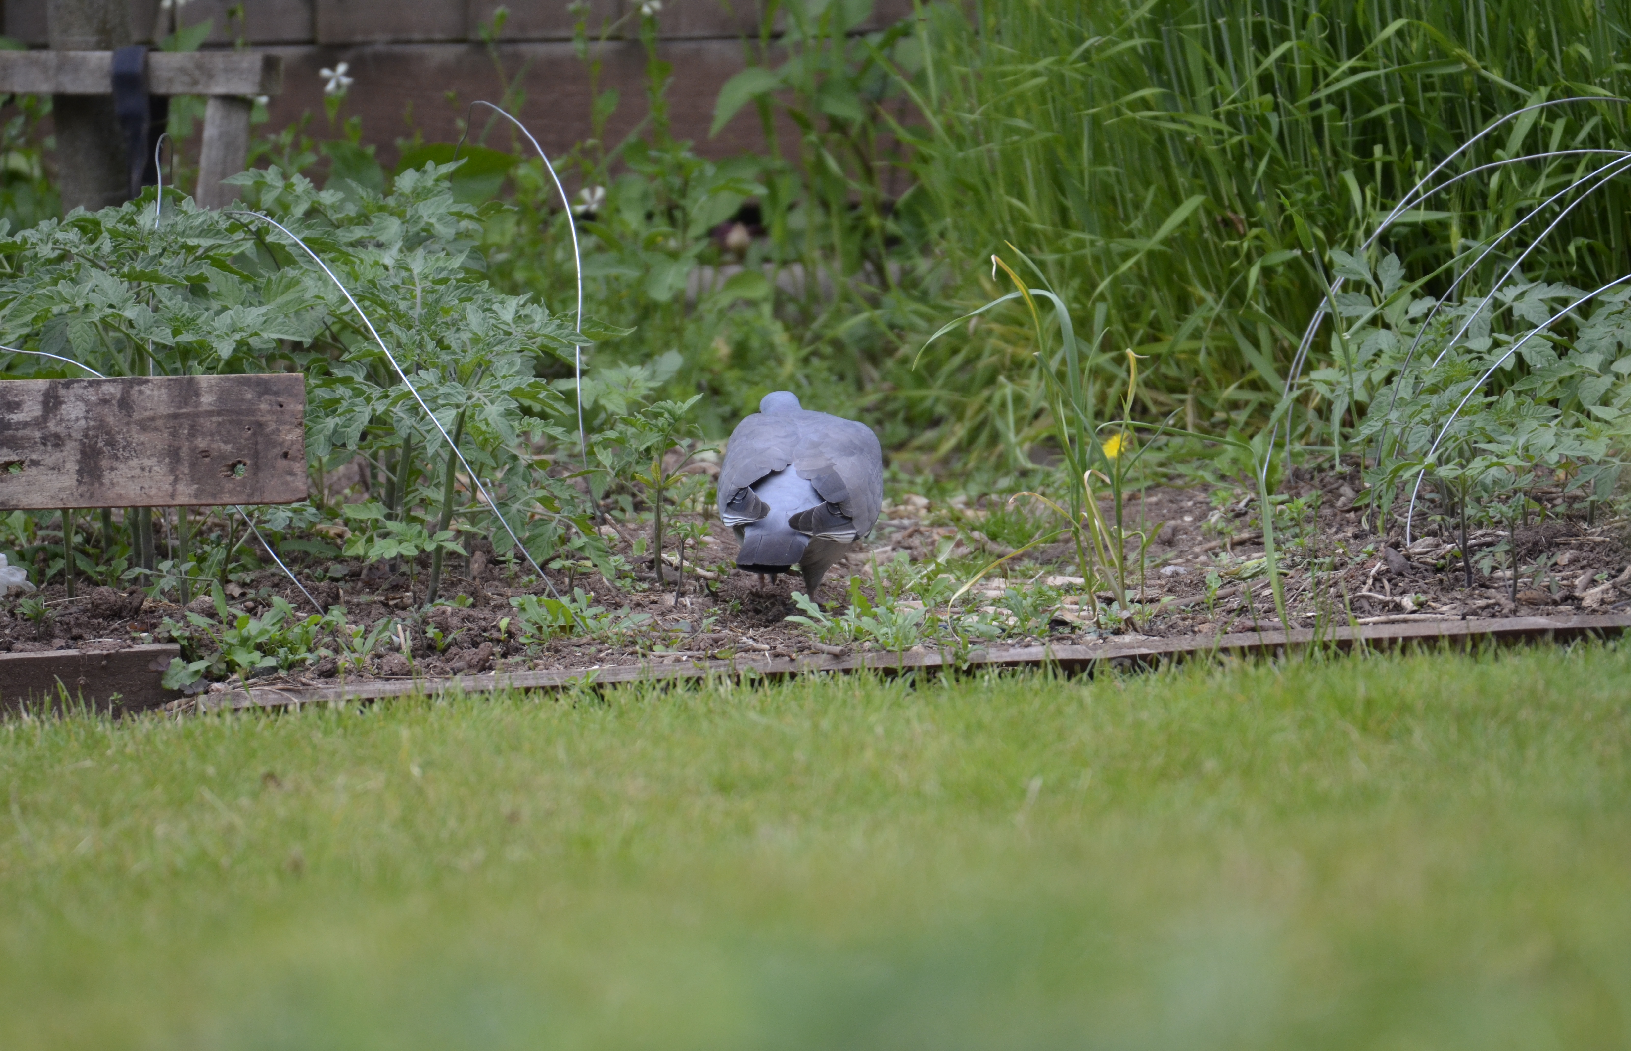 Pigeon on the ground